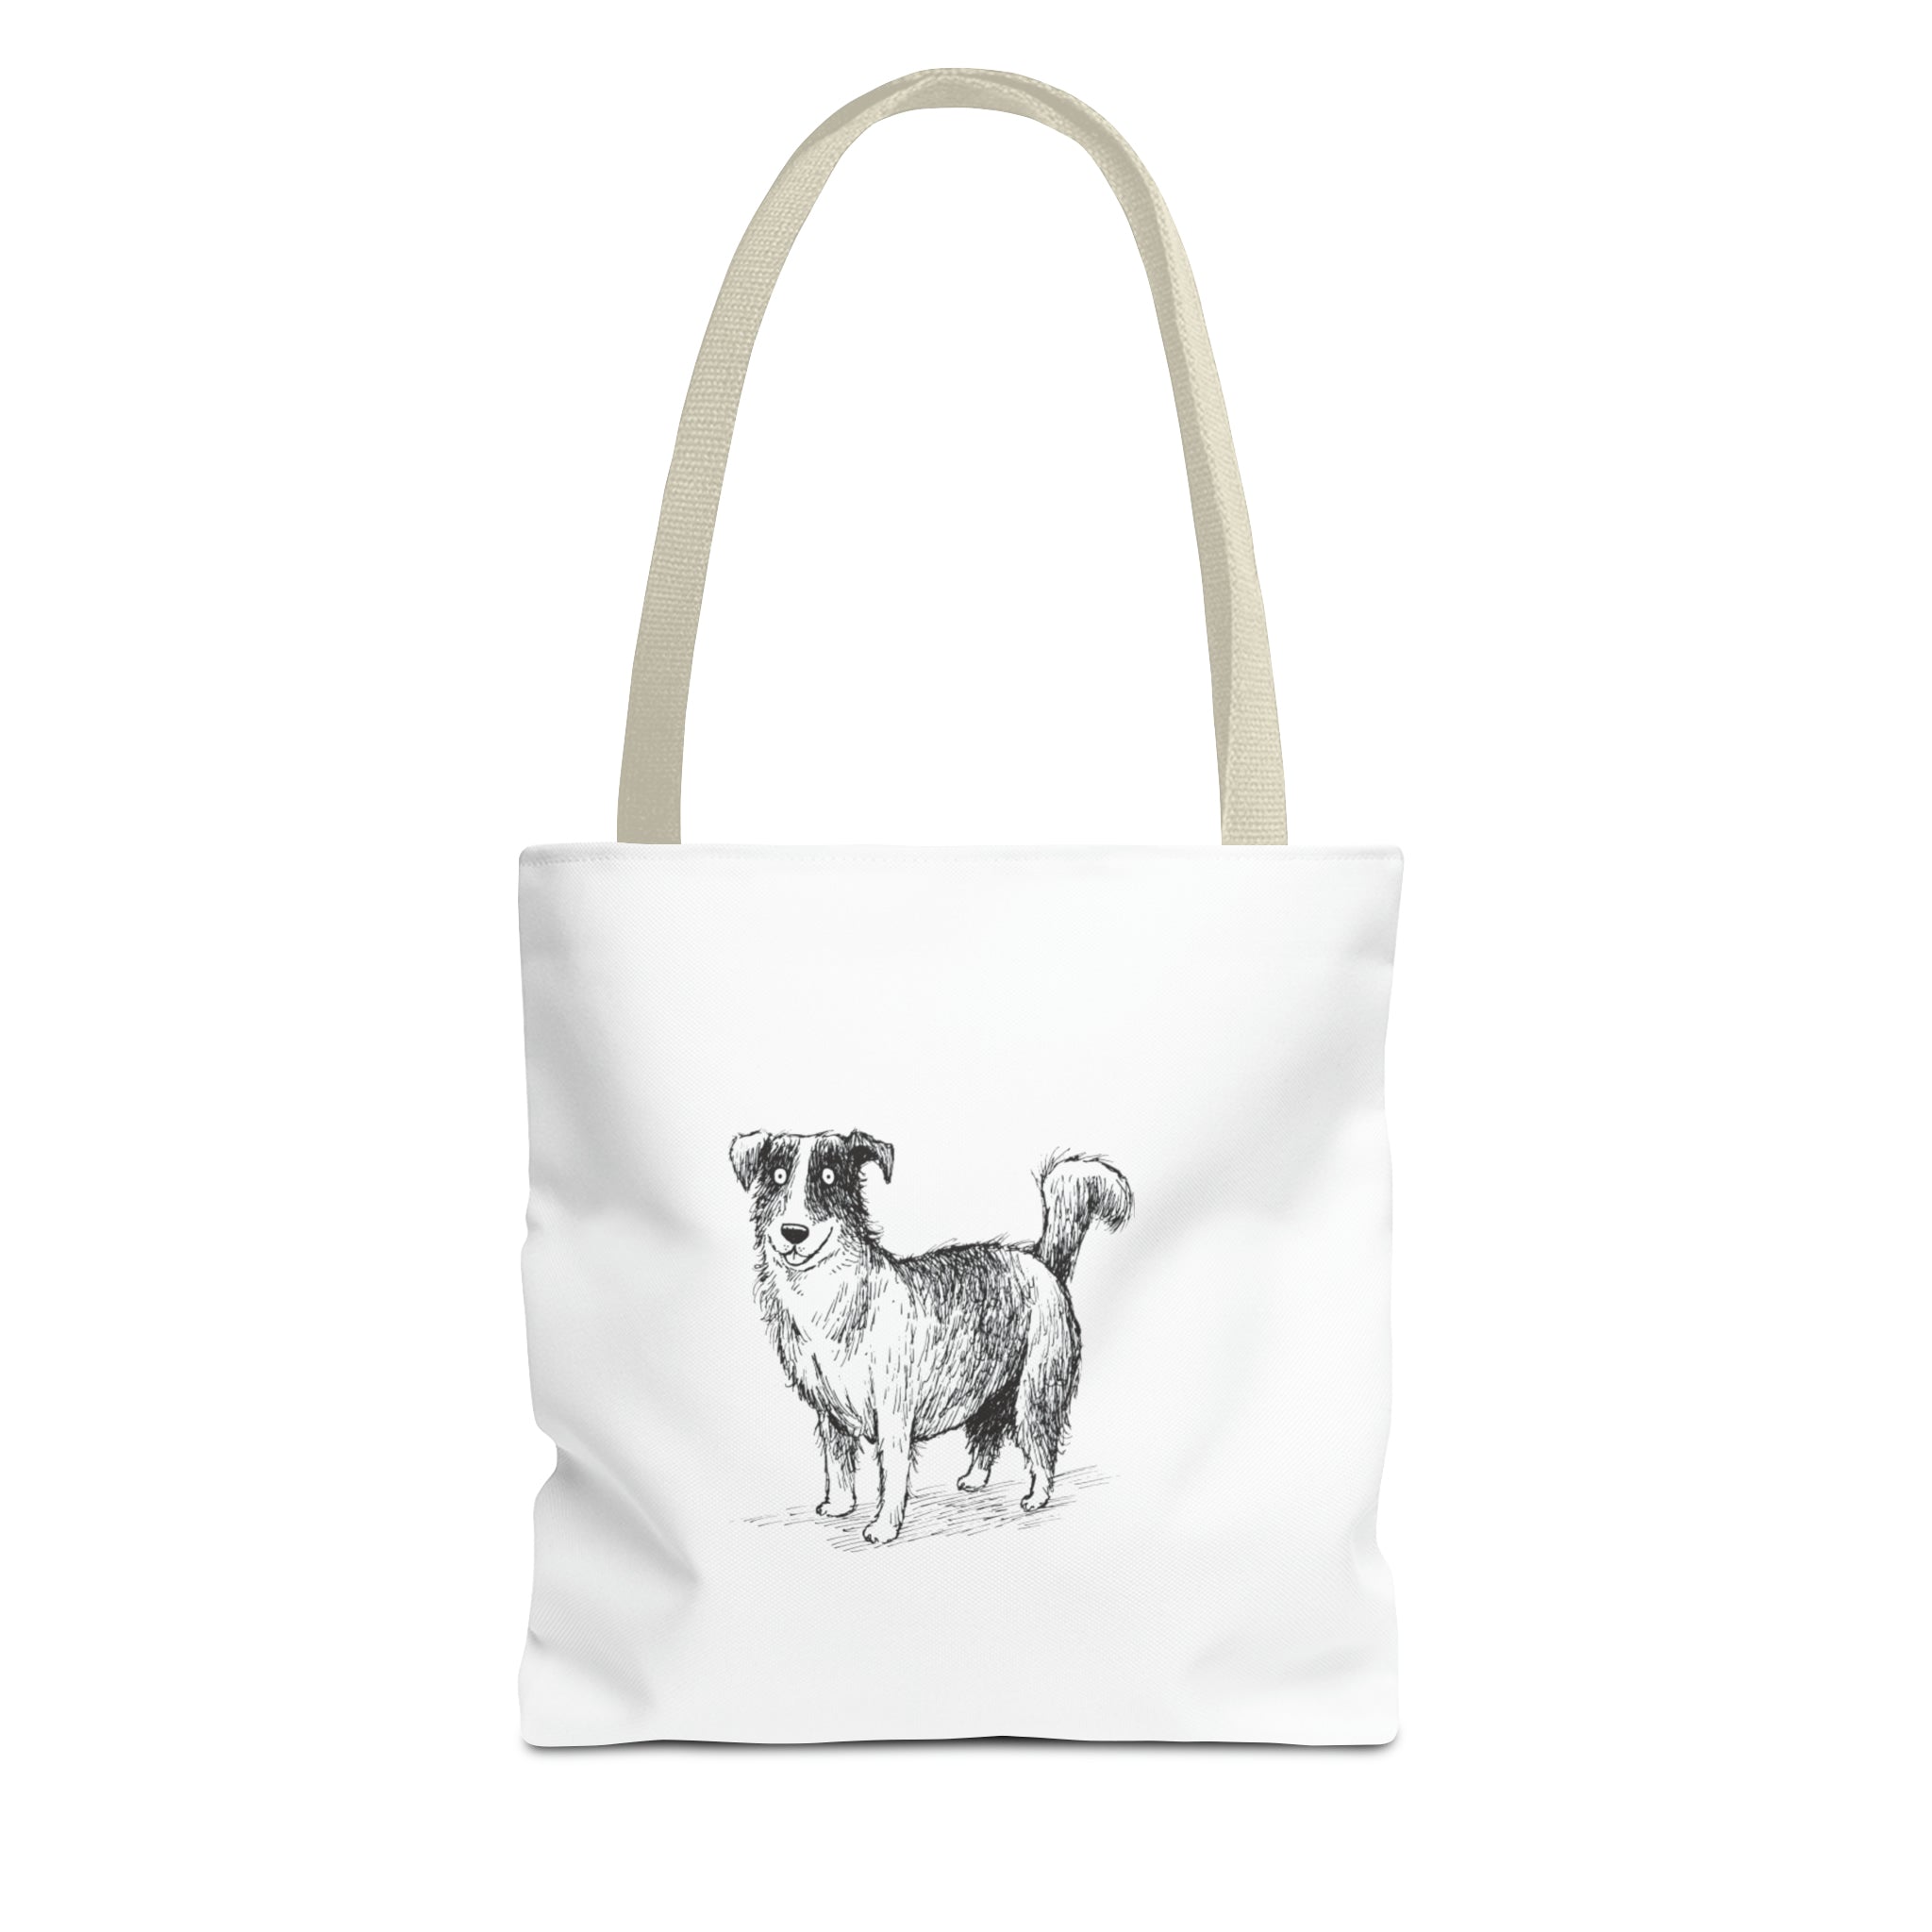 Australian Shepherd - Tote Bag